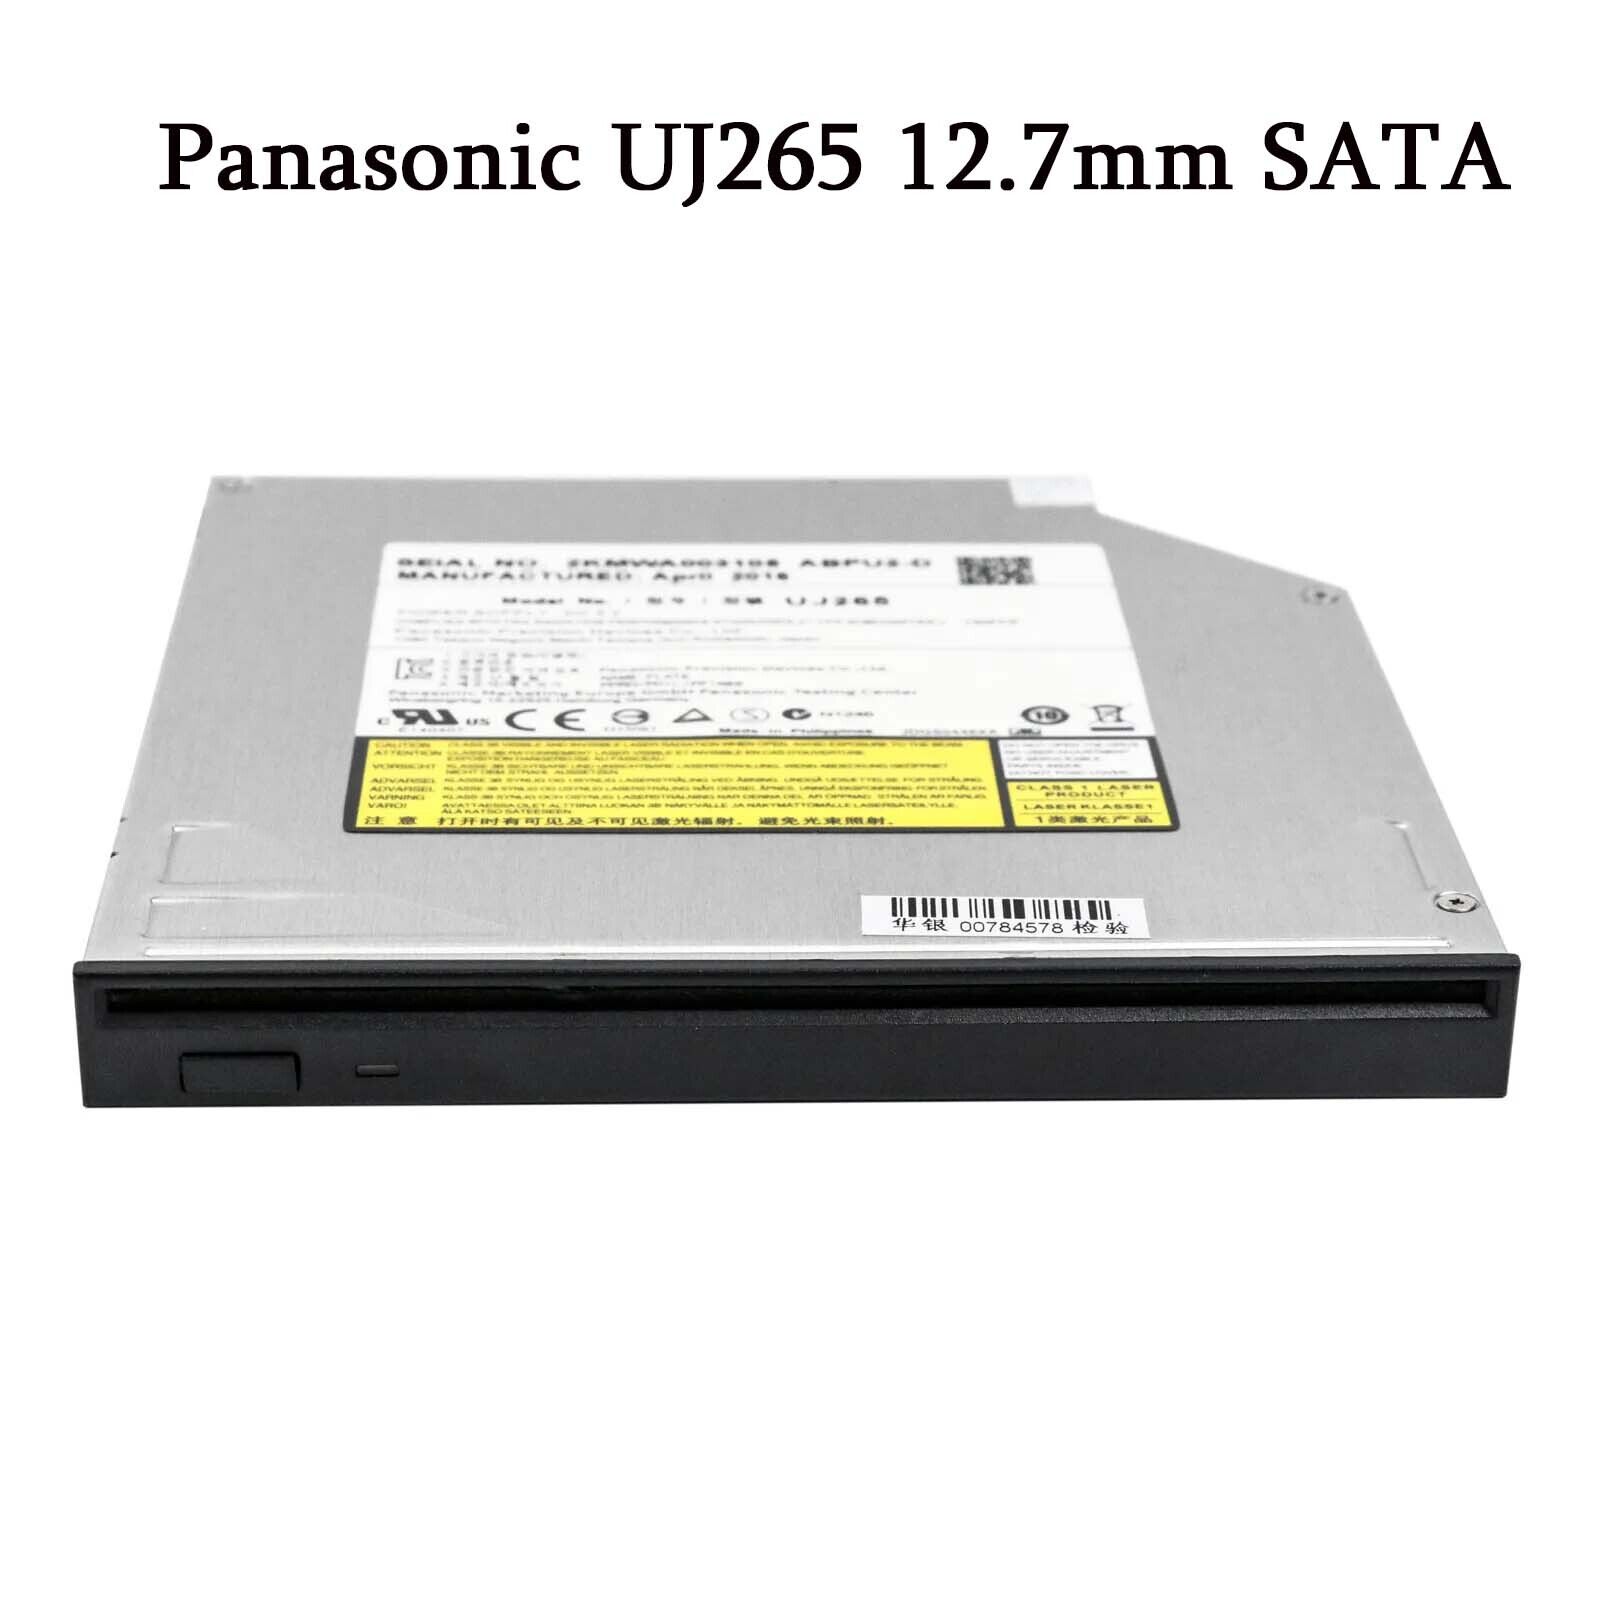 Panasonic UJ265 Slot Load Blu-ray Burner Player 12.7mm SATA Optical Disc Drive